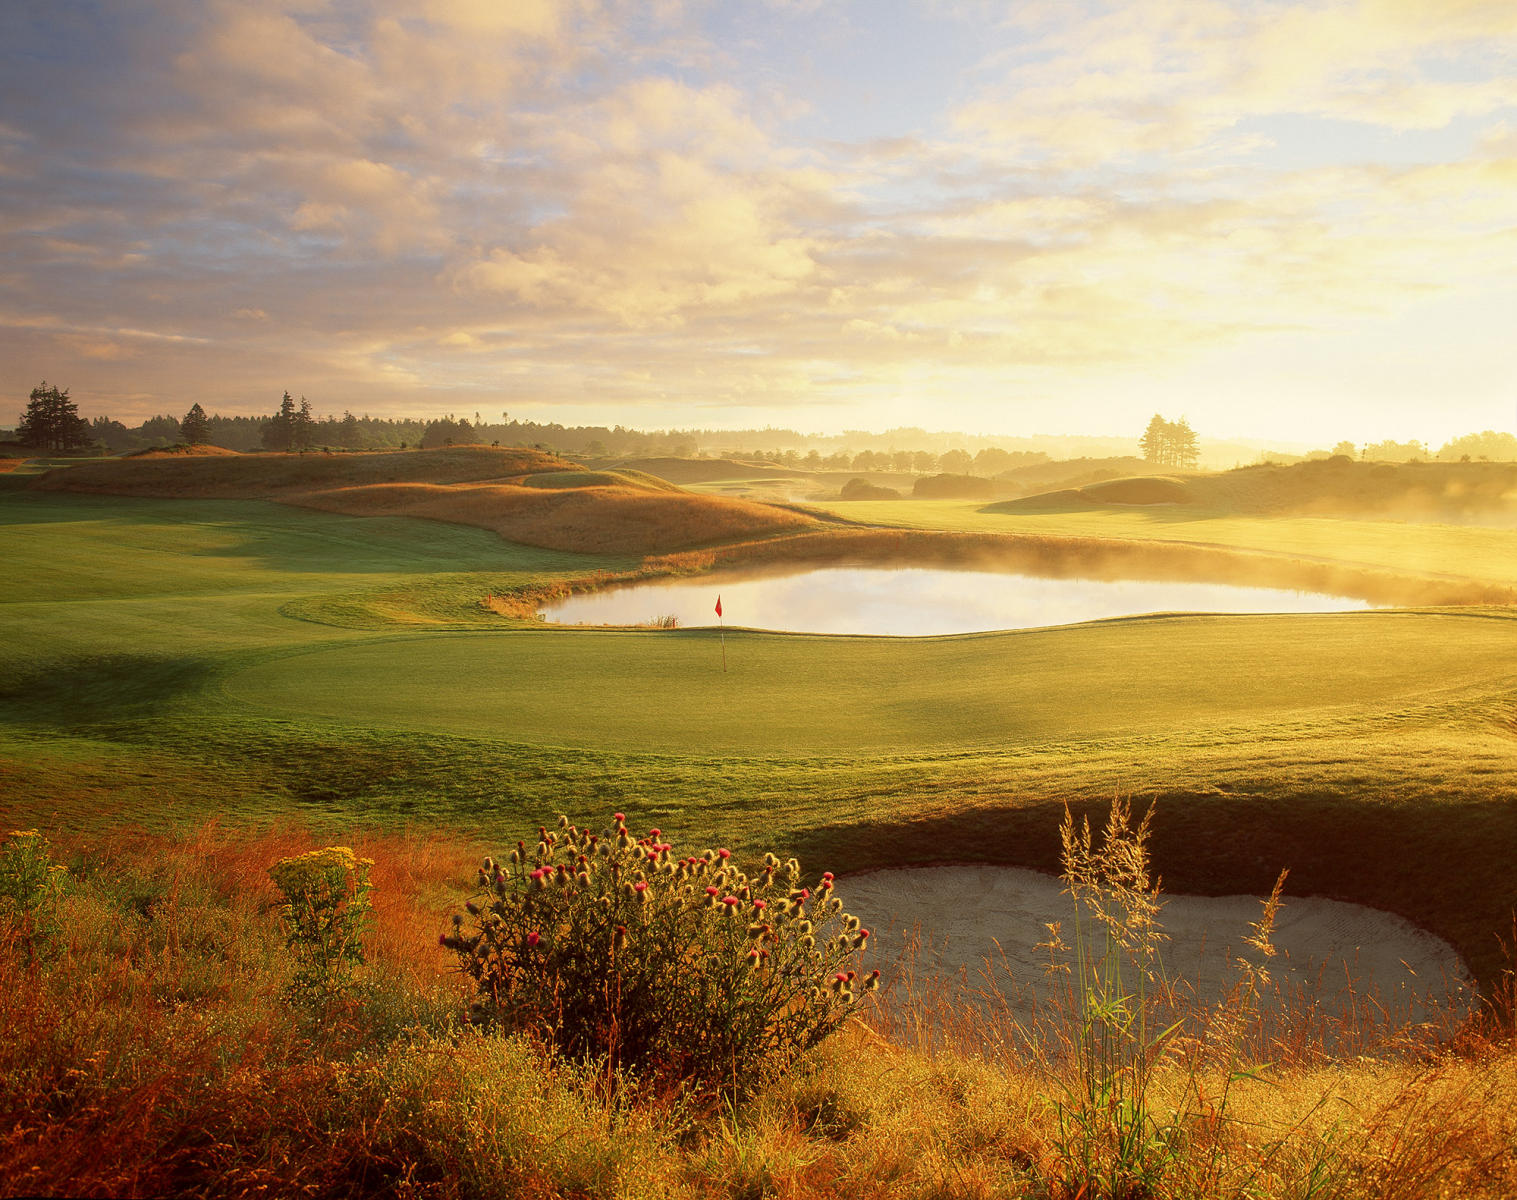 Gleneagles Spa & Golf Resort/PGA Centenary #2, Auchterarder, Scotland